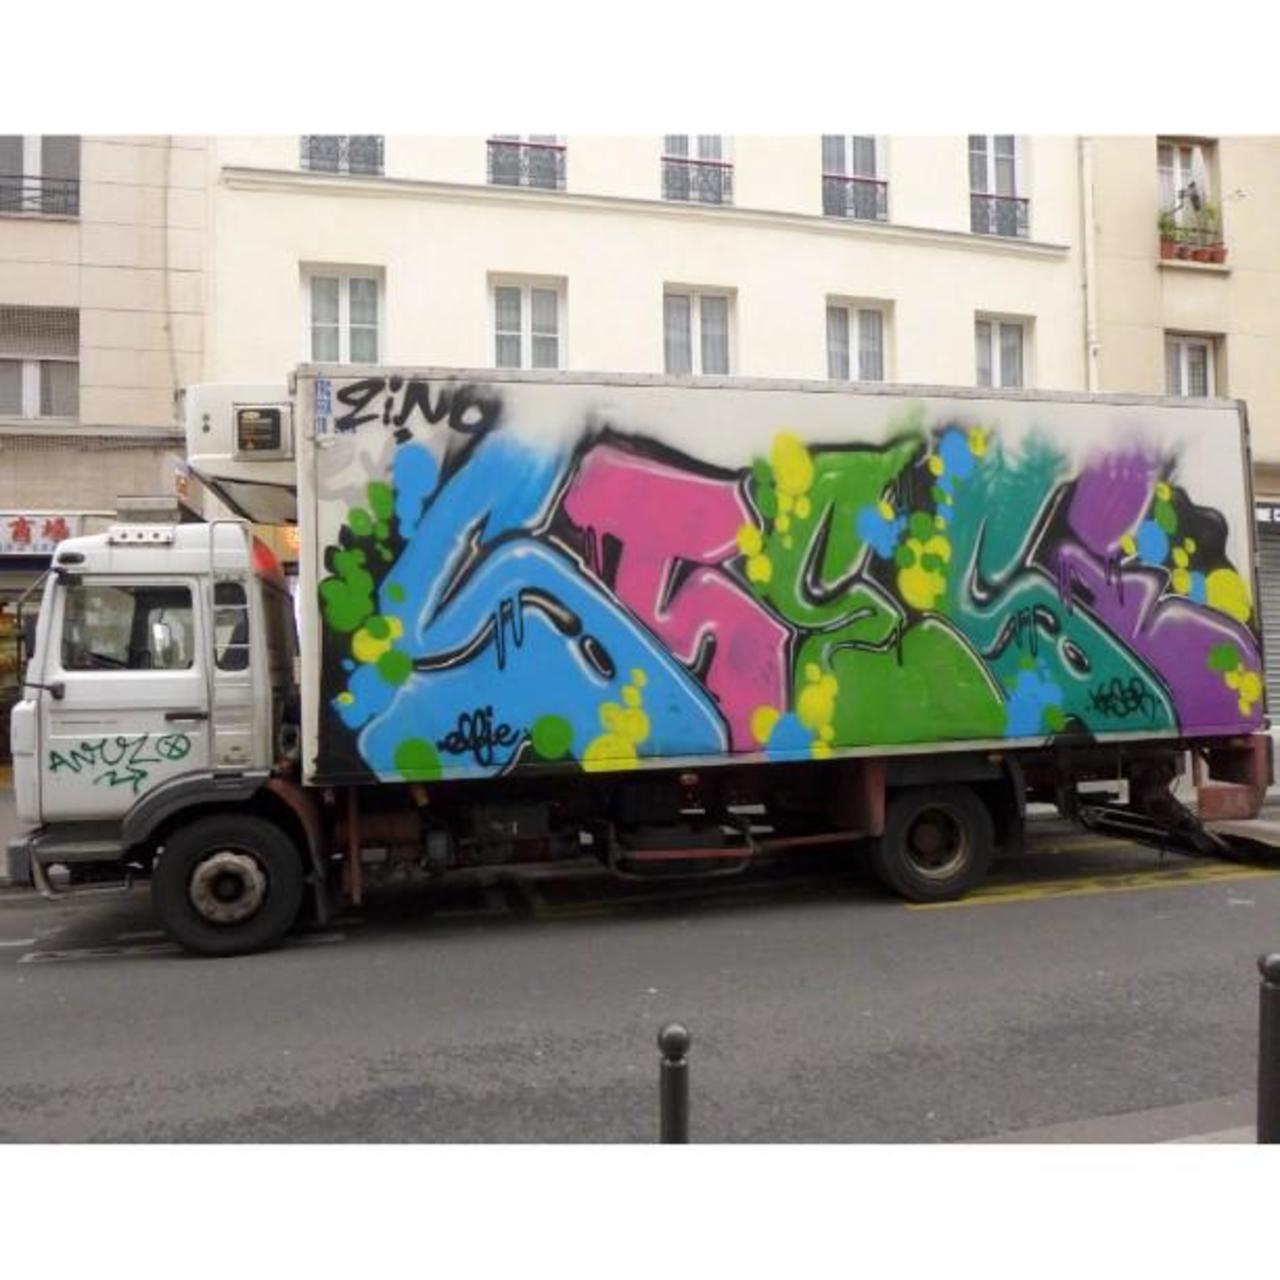 #Paris #graffiti photo by @maxdimontemarciano http://ift.tt/1RjmMeX #StreetArt https://t.co/ckpeId9CLH